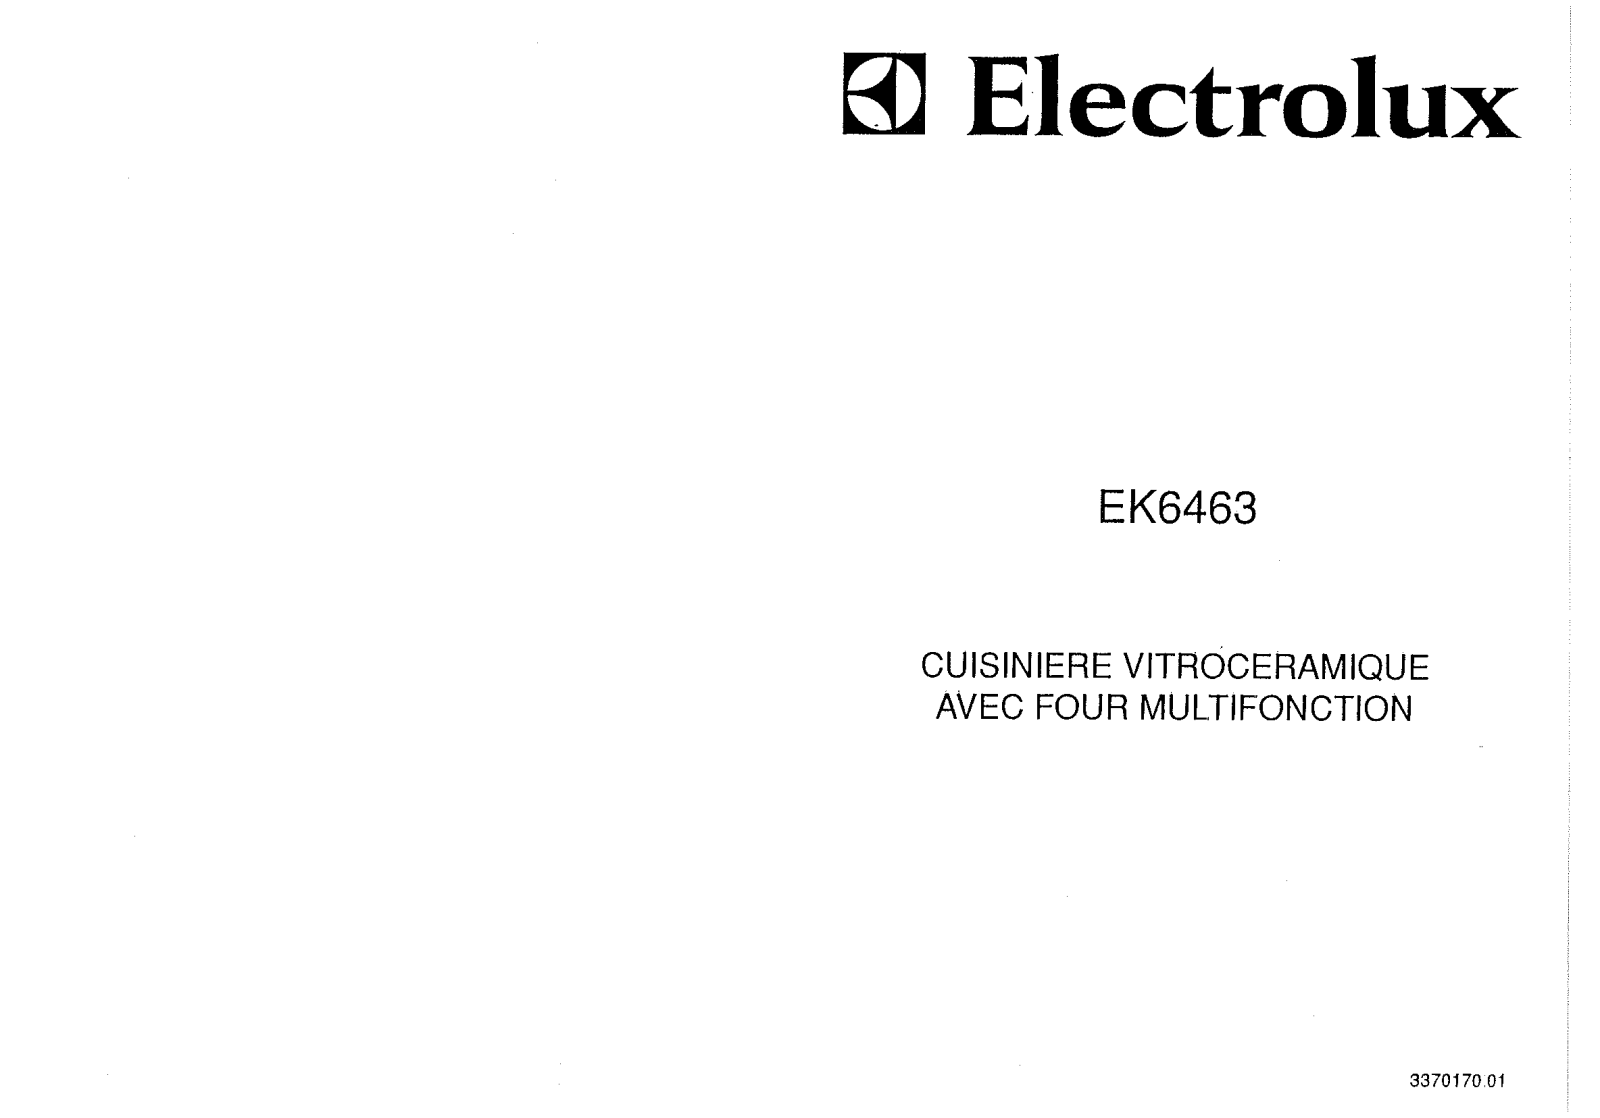 electrolux EK6463 User Manual